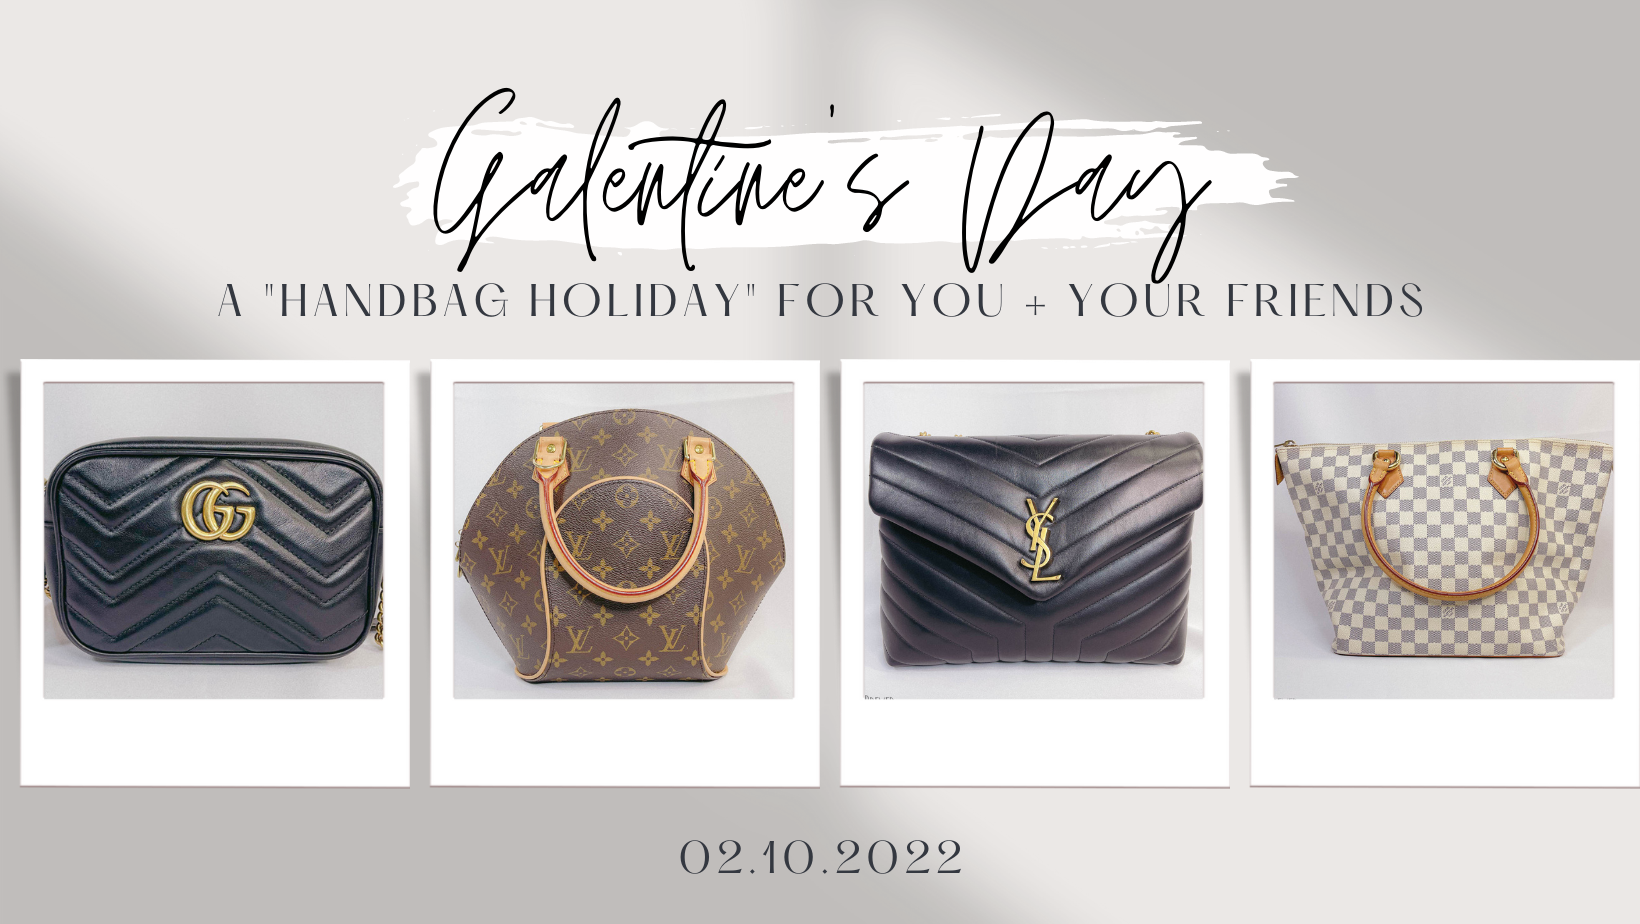 Best Luxury Bags Under $1500  Louis Vuitton, YSL, Prada, Gucci & More 